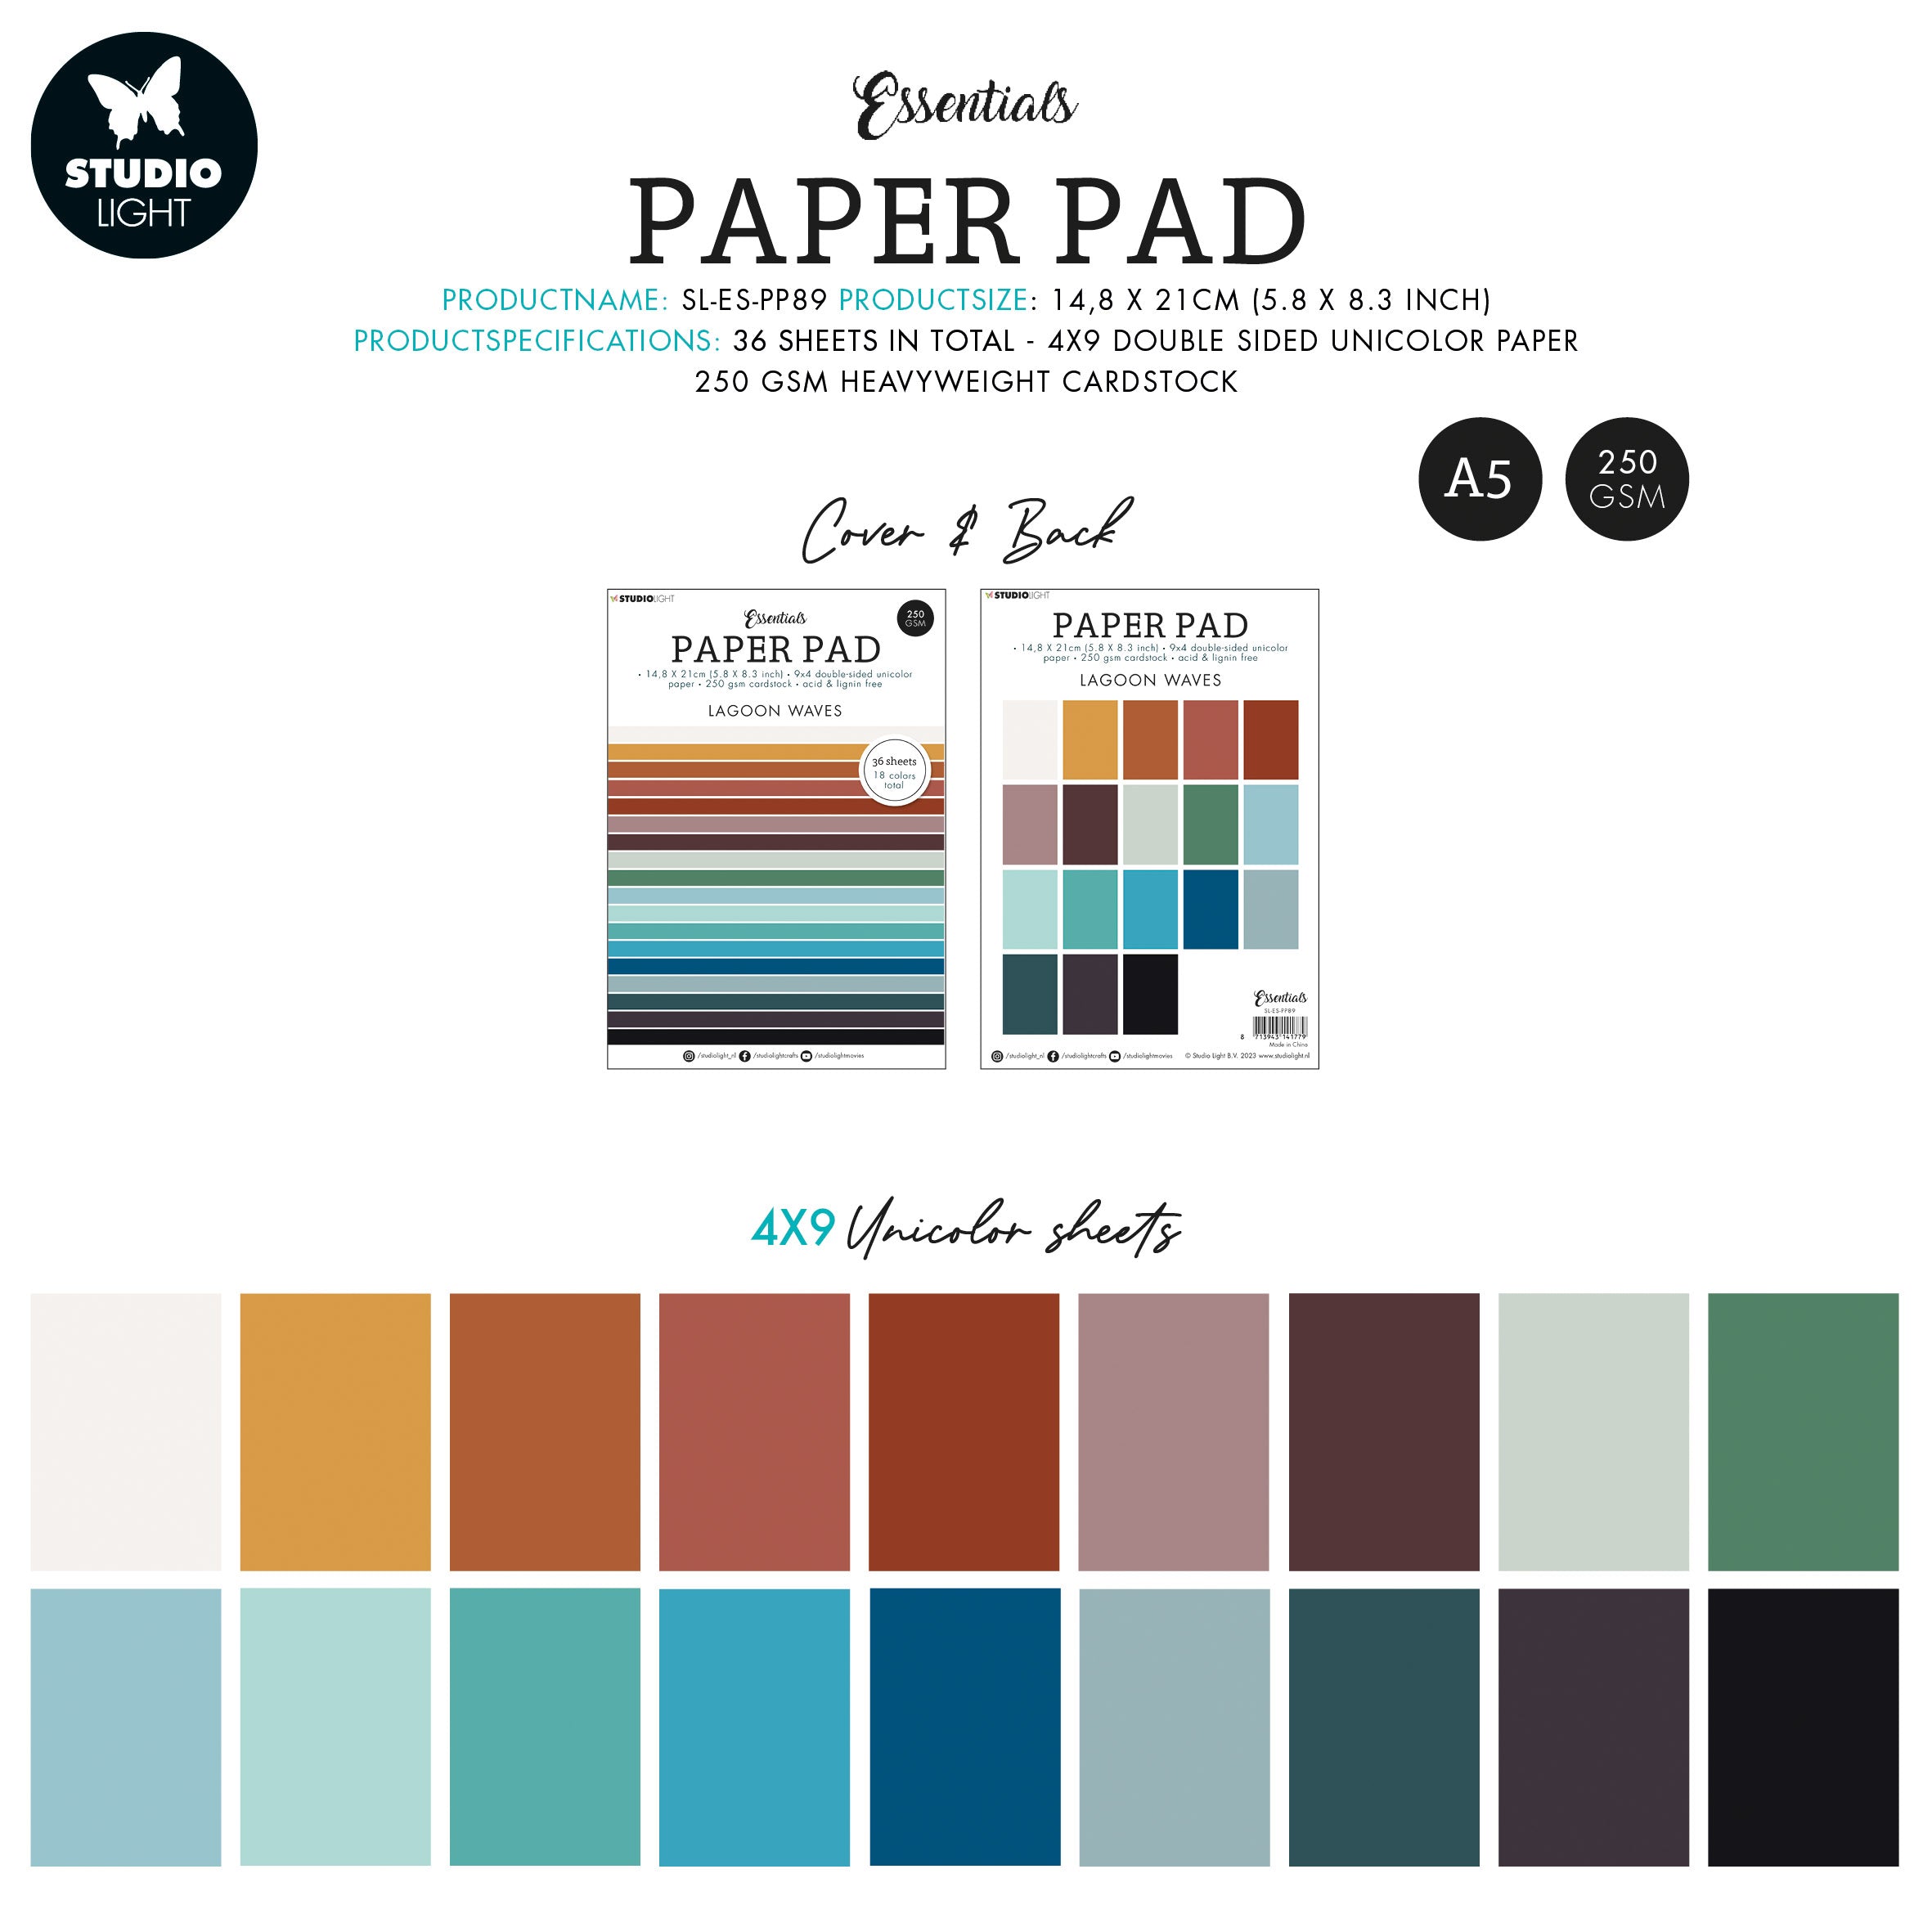 SL Paper Pad Unicolor Paper Lagoon Waves Essentials 210x148x9mm 36 SH nr.89